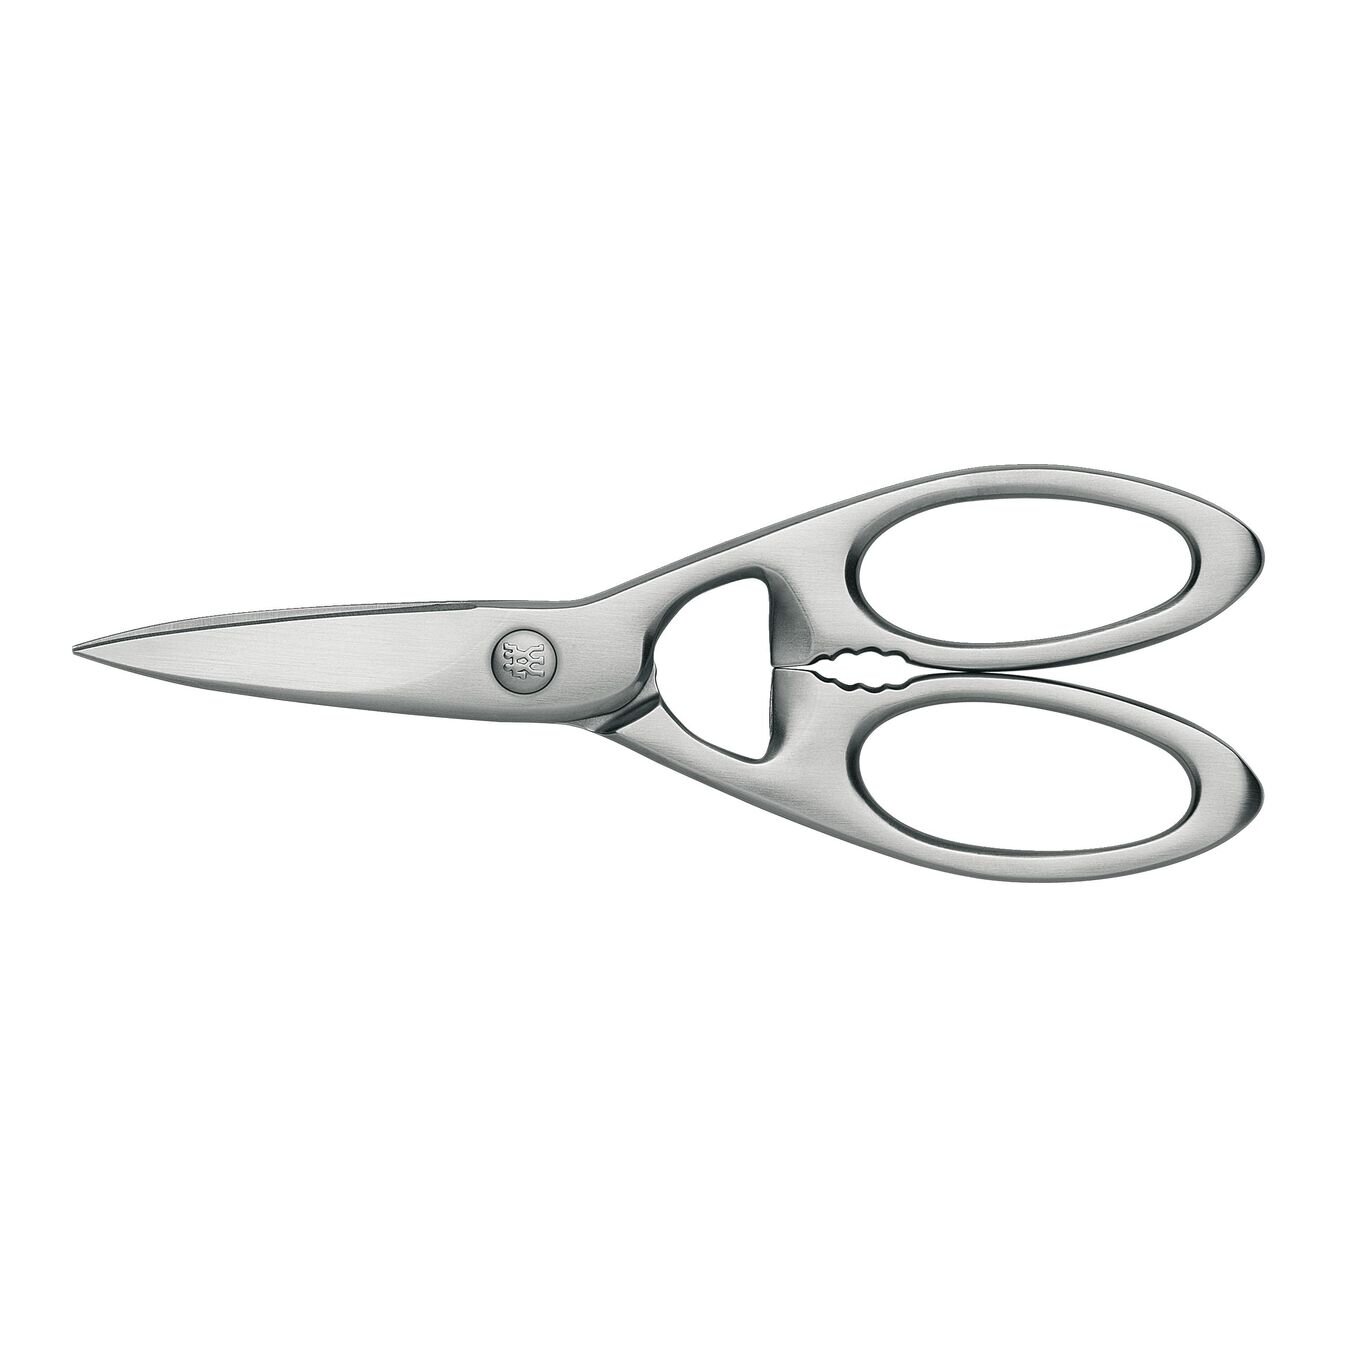 OXO Good Grips Multi-Purpose Kitchen and Herbs Scissors & Swivel Peeler